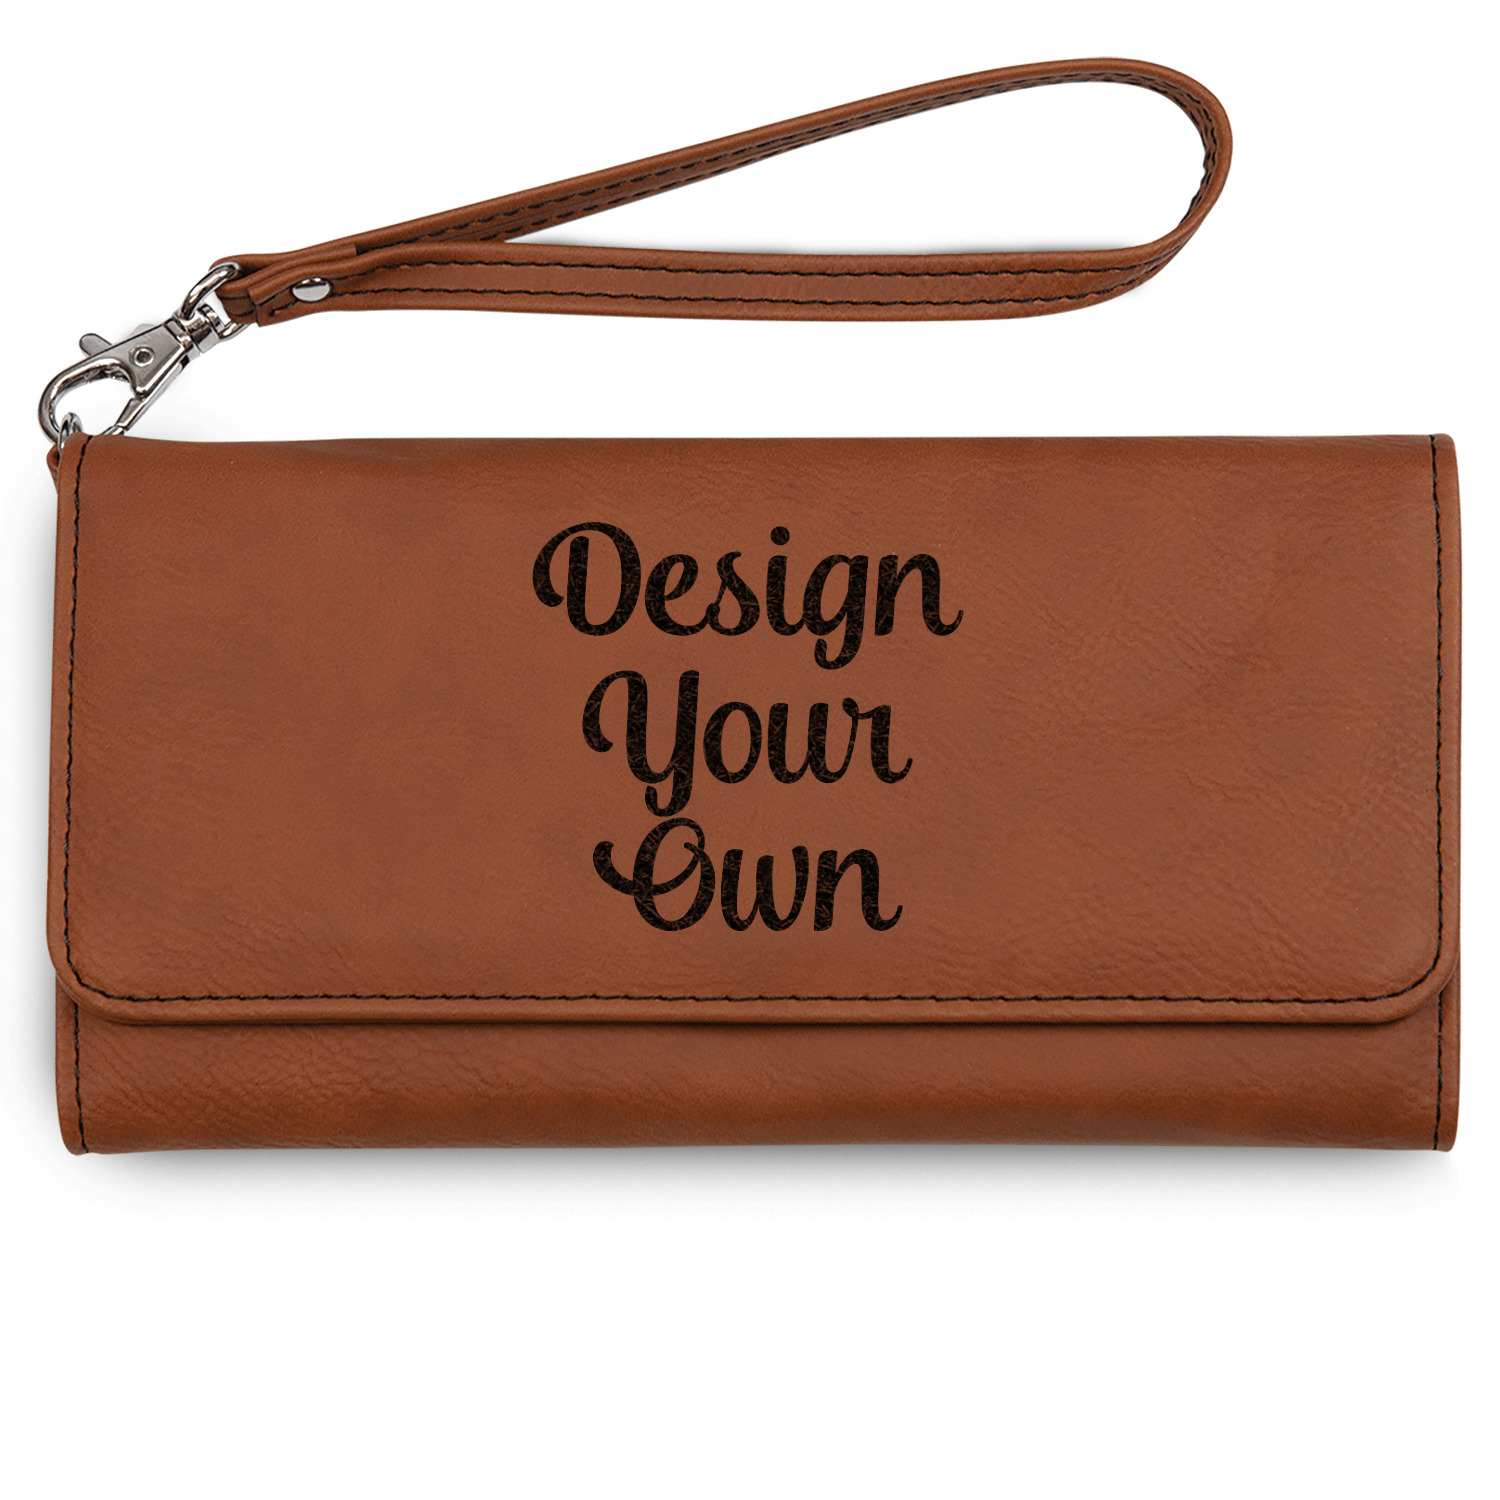 Your Image Custom Made Leather Handbags Custom Design Your Own Handbag  Customized Handbags